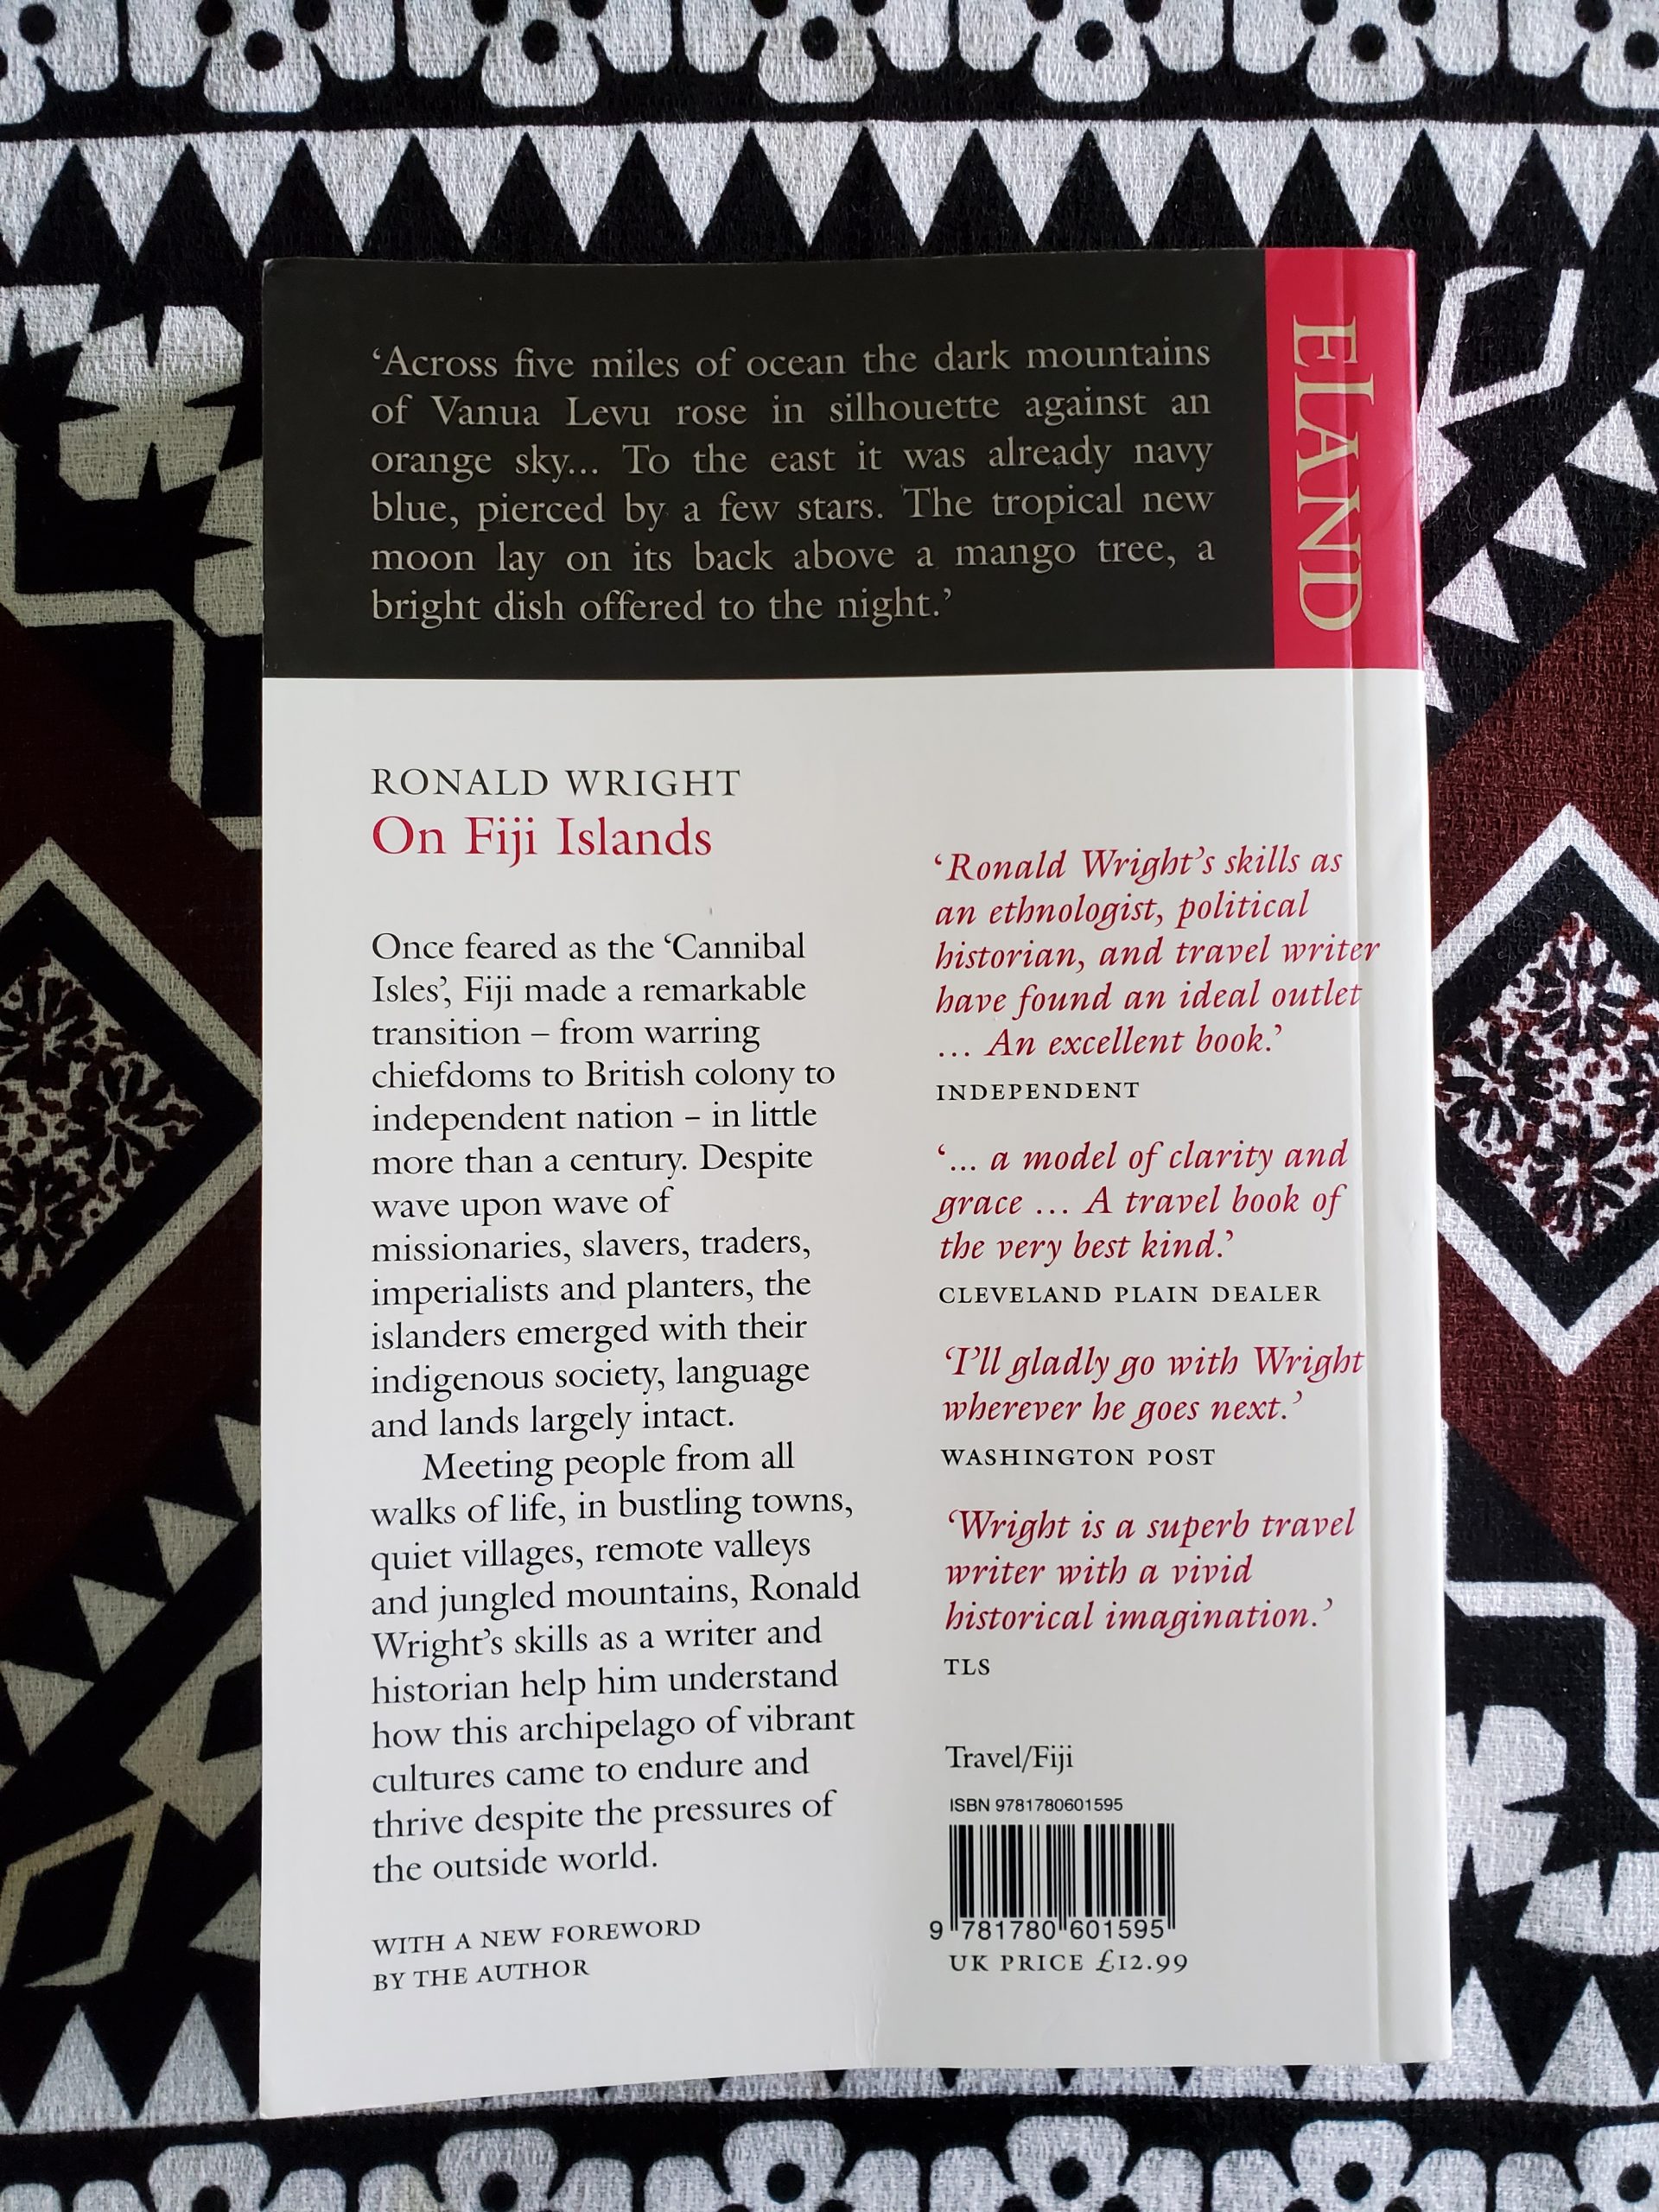 On Fiji Islands back book cover